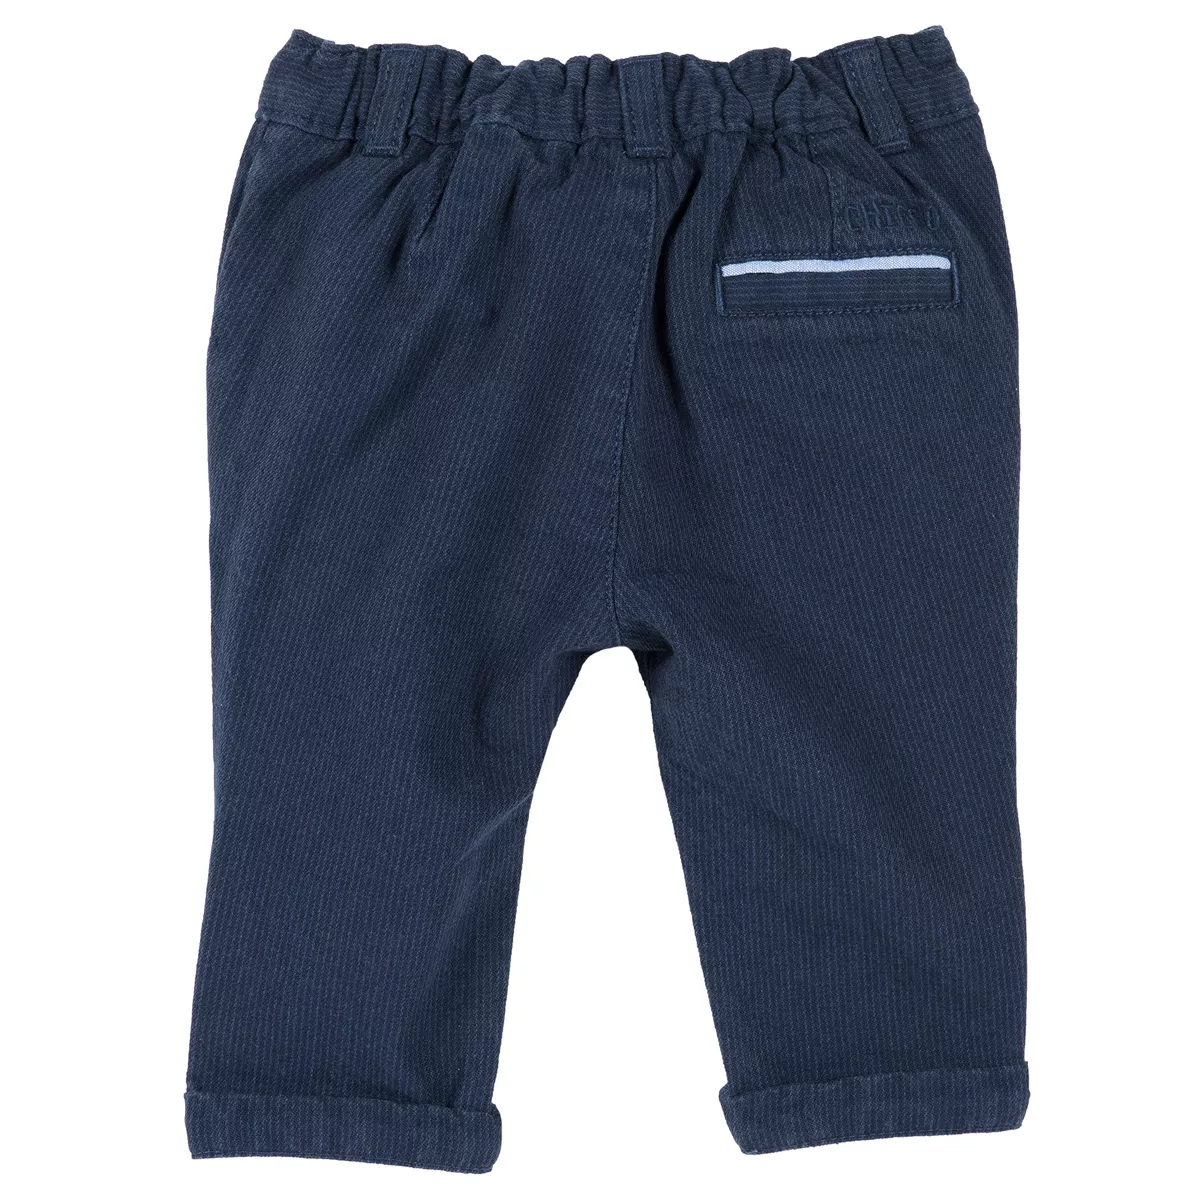 Pantalon lung copii Chicco, elastic, albastru, 80